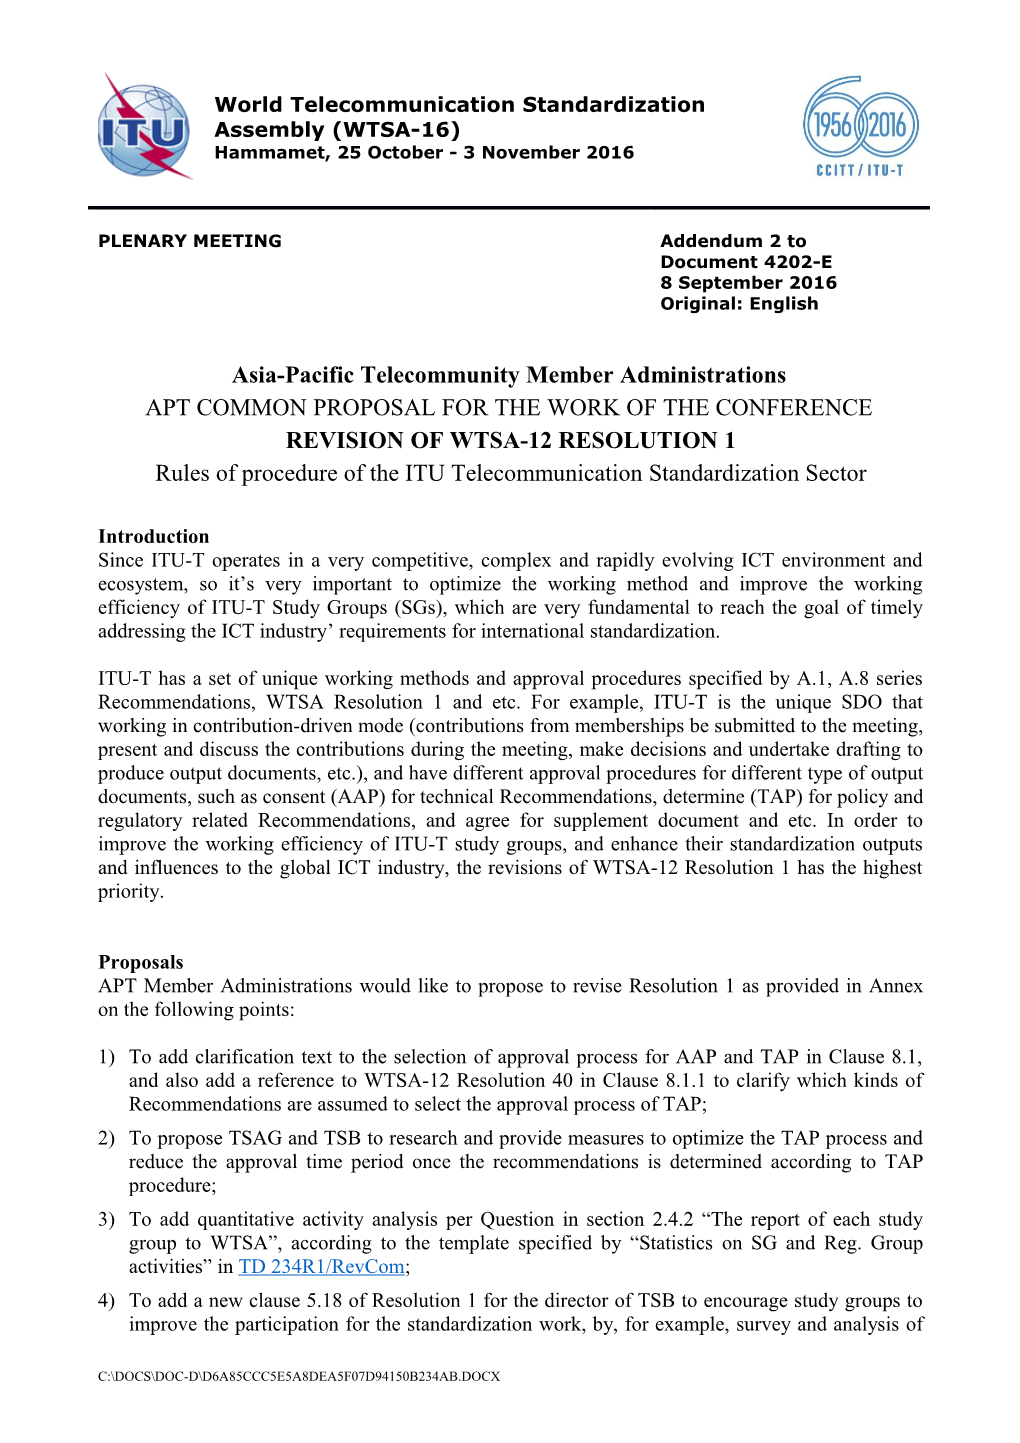 Revision of WTSA-12 Resolution 1